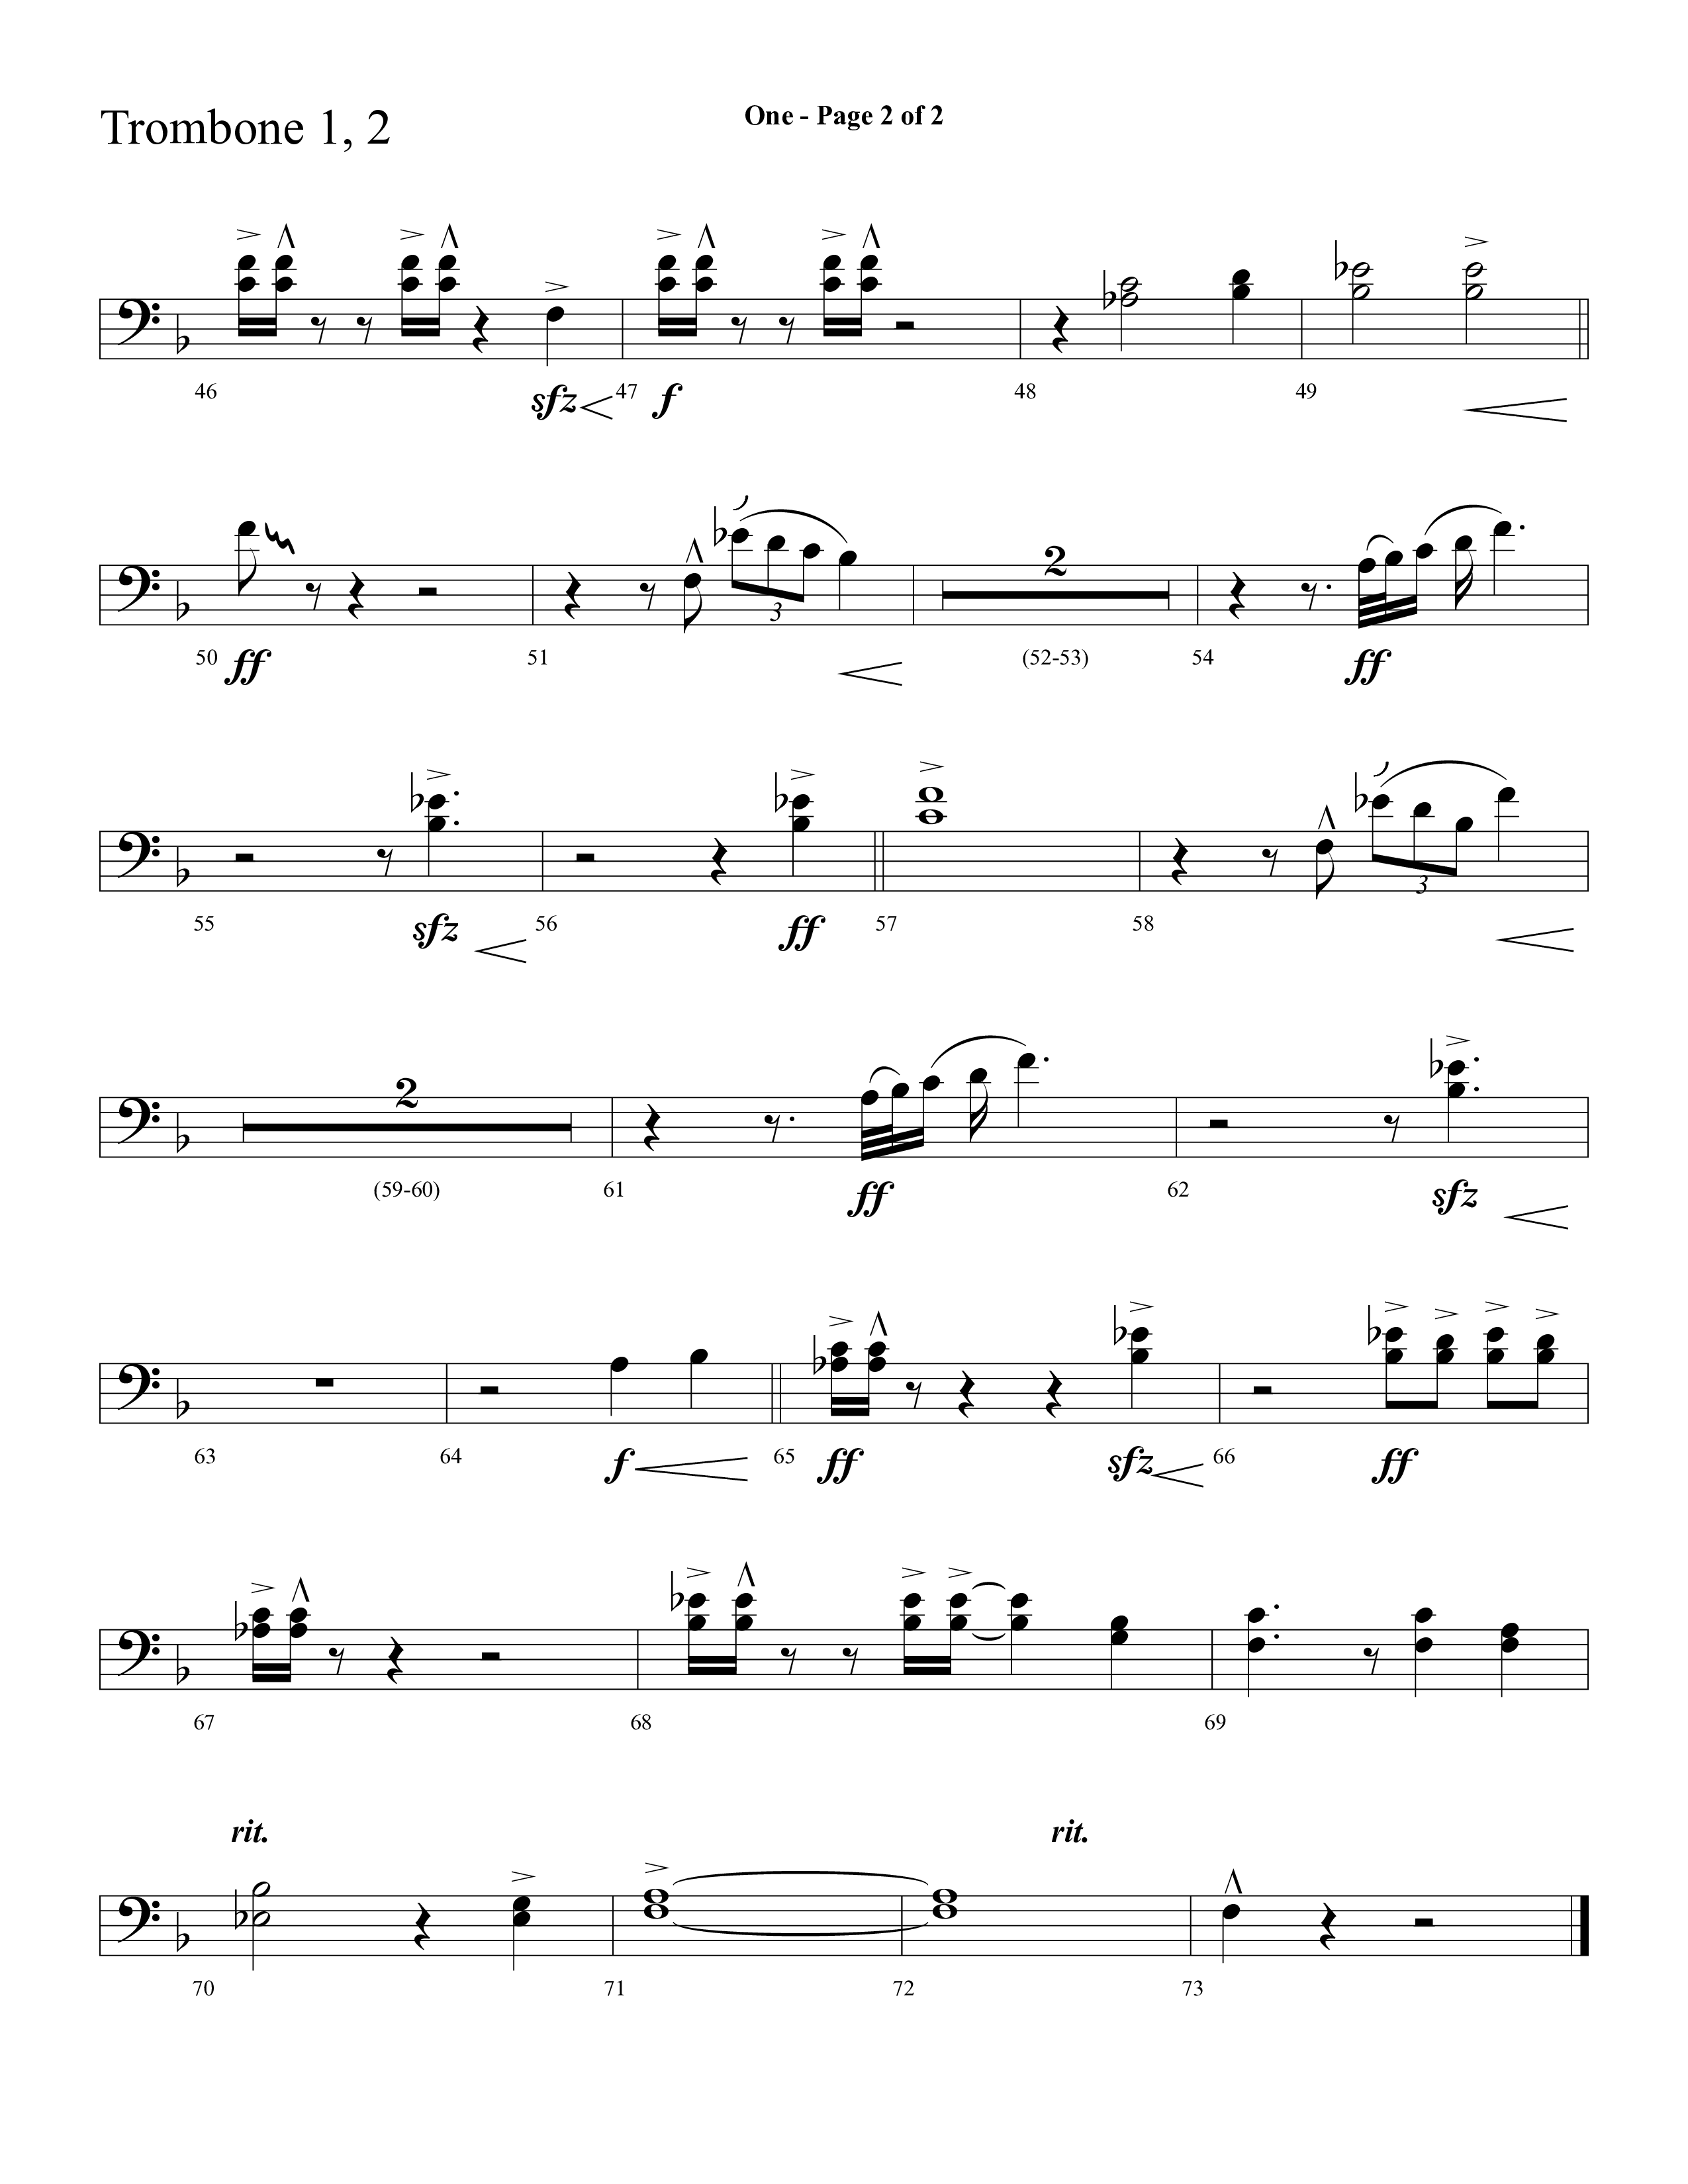 One (Choral Anthem SATB) Trombone 1/2 (Lifeway Choral)